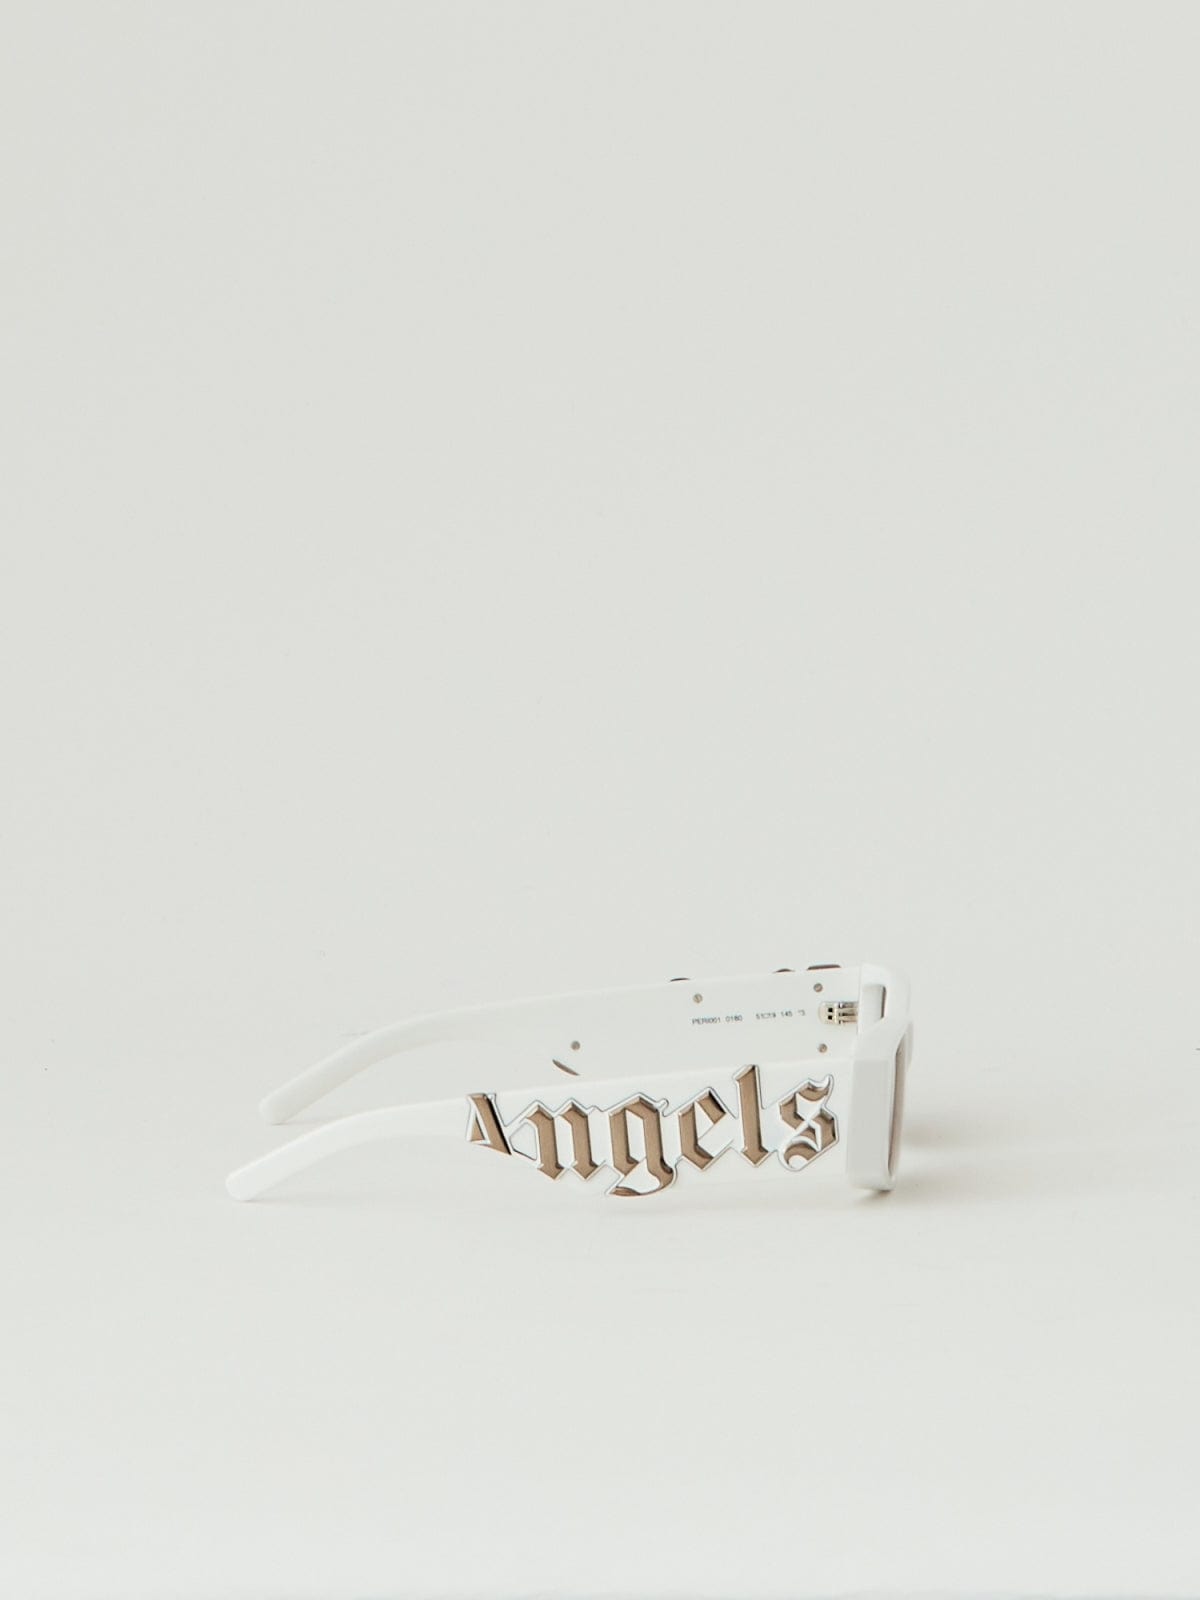 Palm Angels Occhiali da sole 51 / Bianco / Wayfarer Palm Angels Angel: occhiale da sole bianco squadrato con lenti marroni